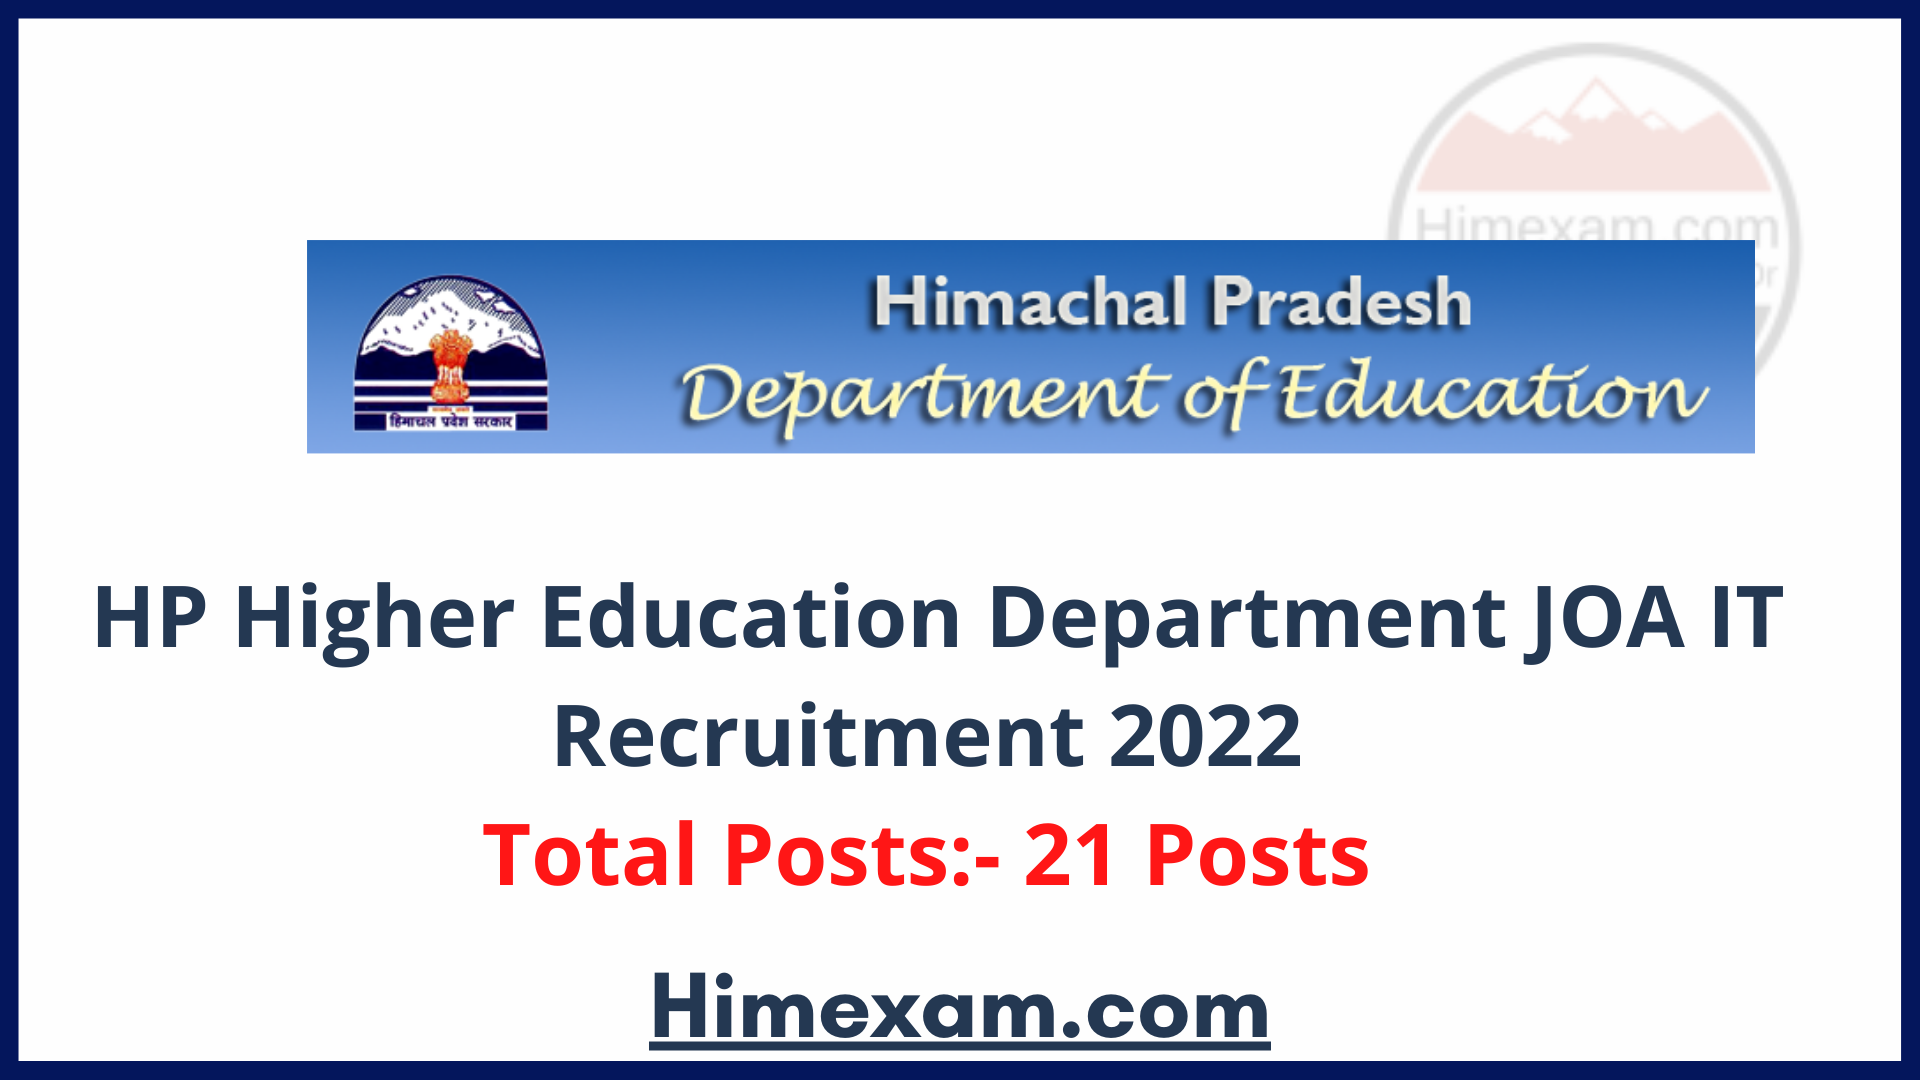 HP Higher Education Department JOA IT Recruitment 2022